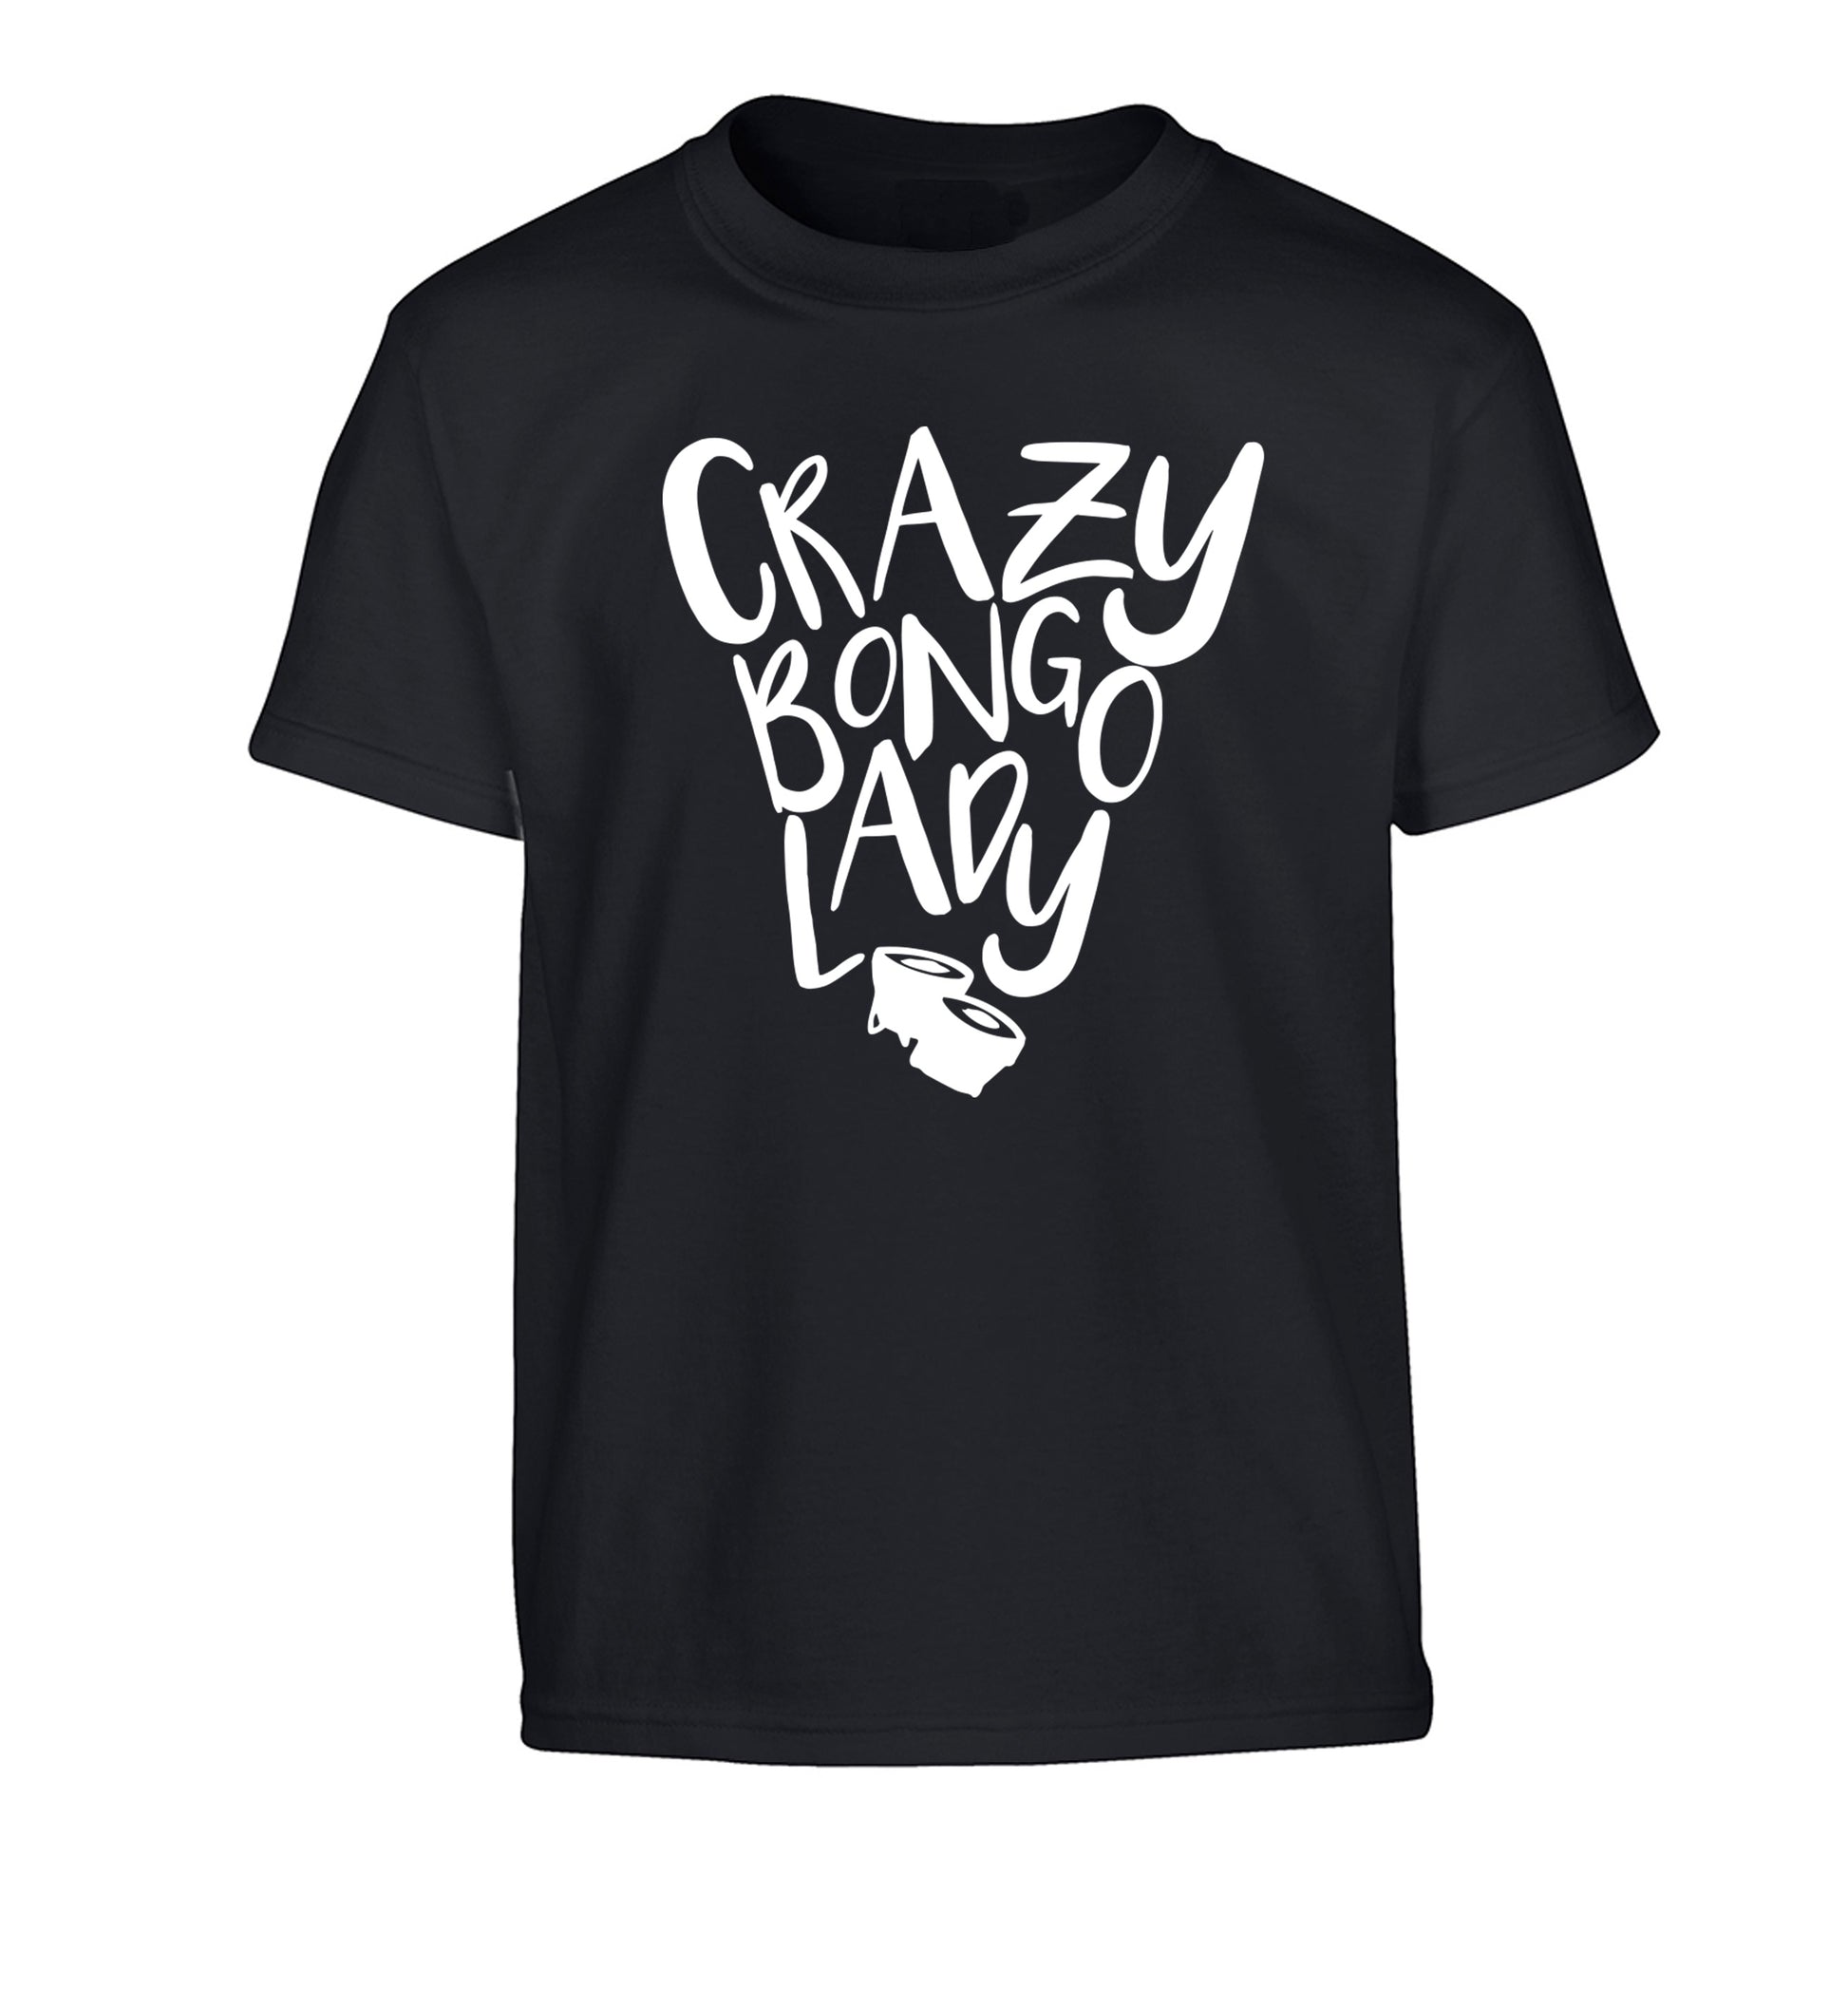 Crazy bongo lady Children's black Tshirt 12-14 Years